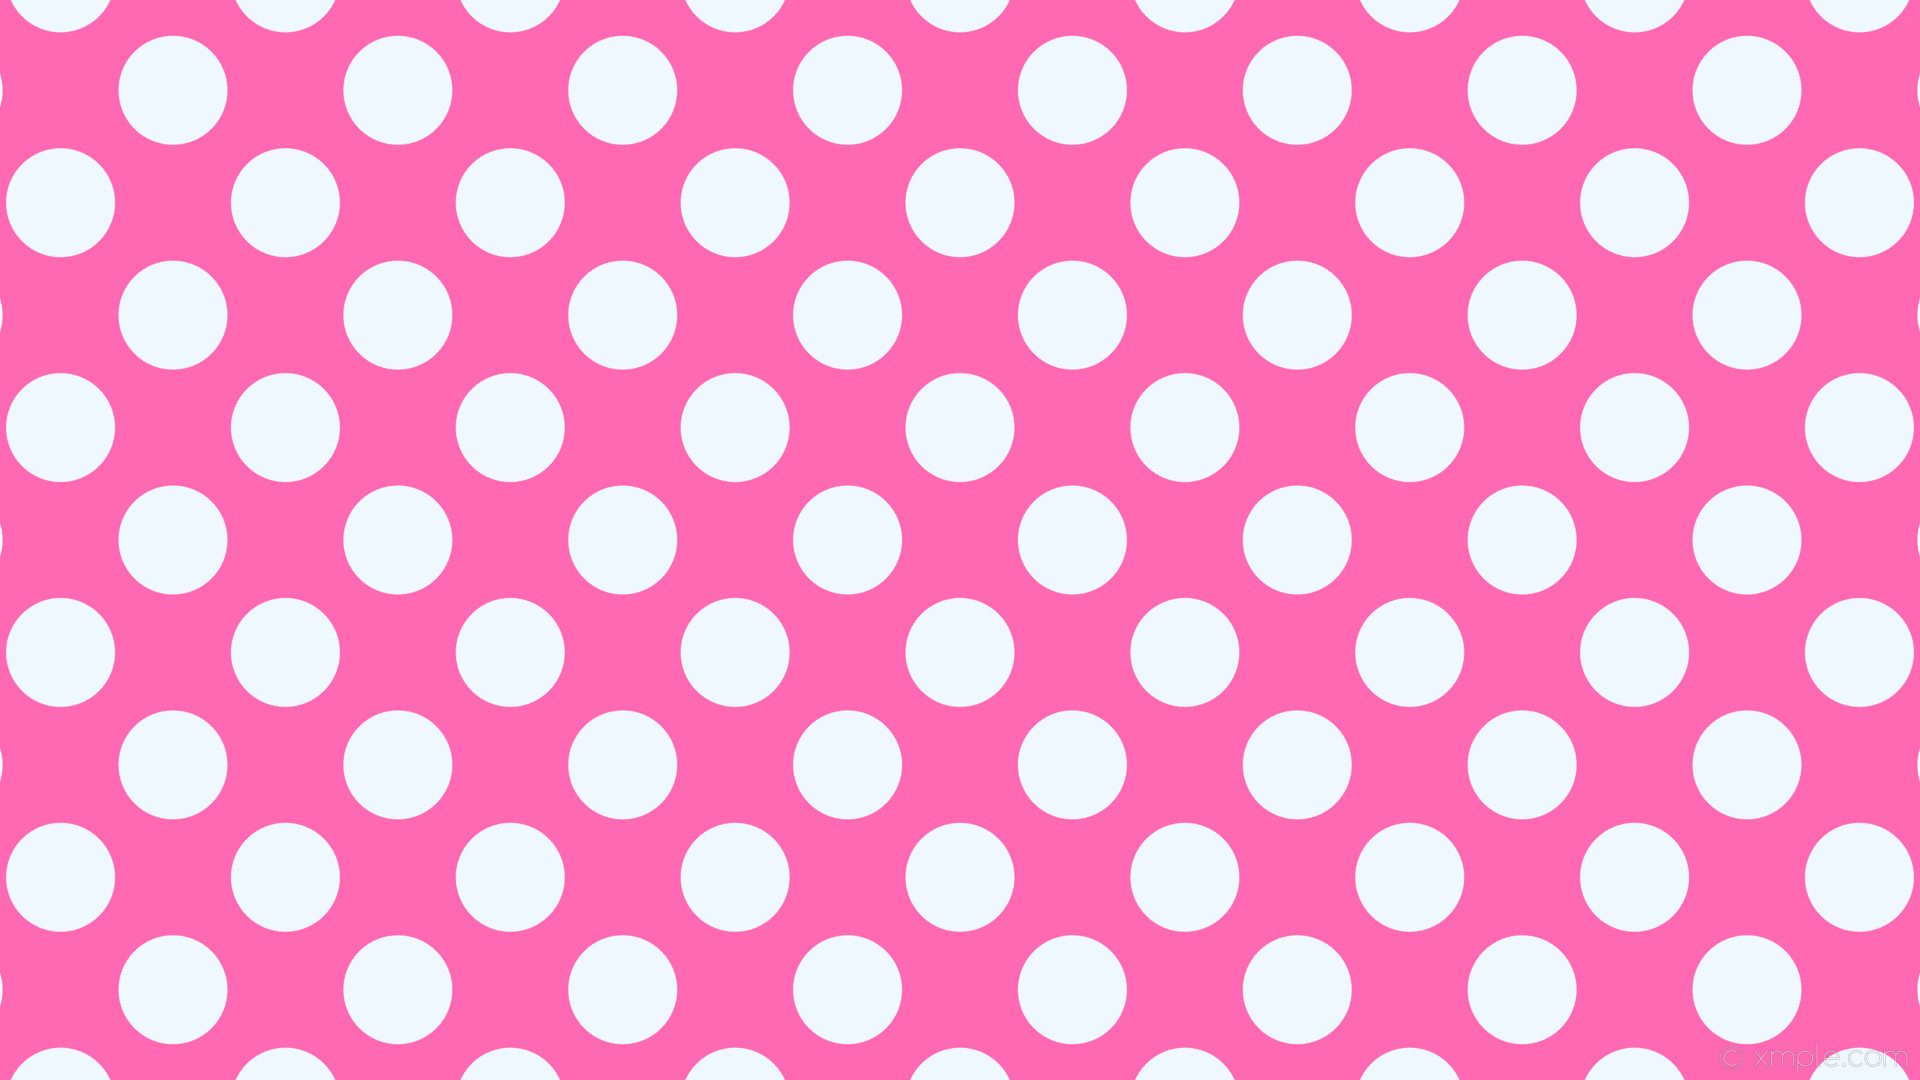 wallpaper polka dots spots pink white hot pink alice blue #ff69b4 #f0f8ff  225Â°